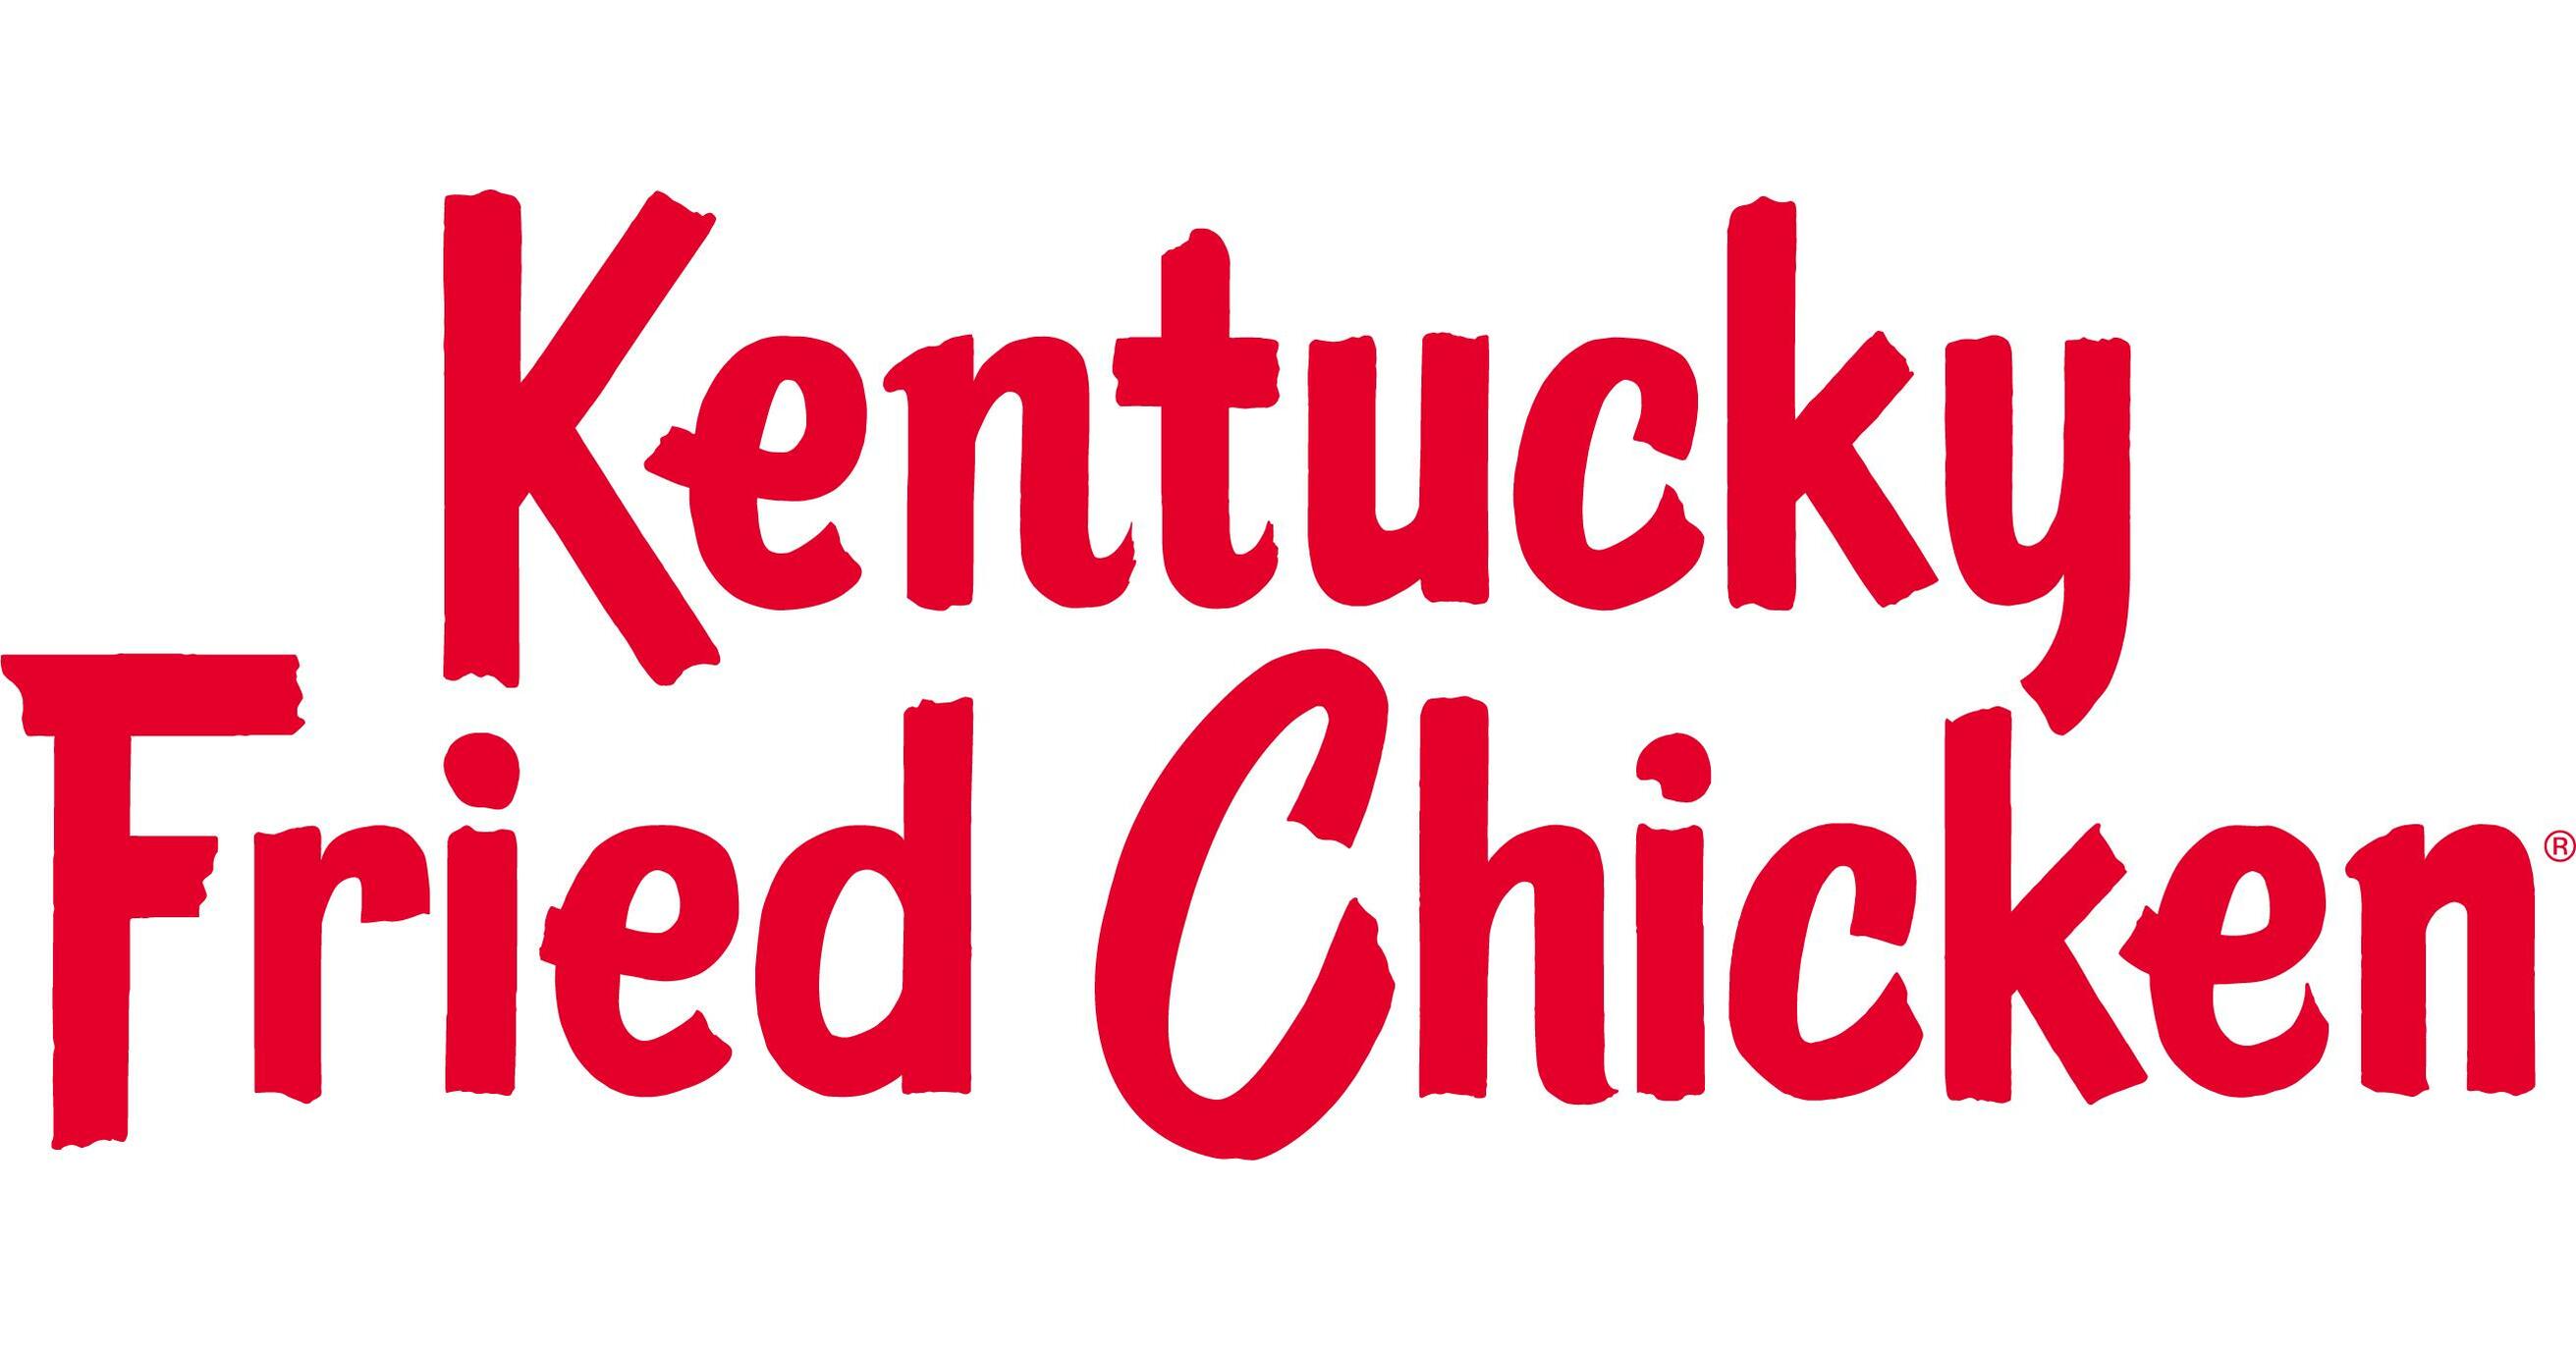 KFC Launches New $20 Fill Up Box - Chew Boom